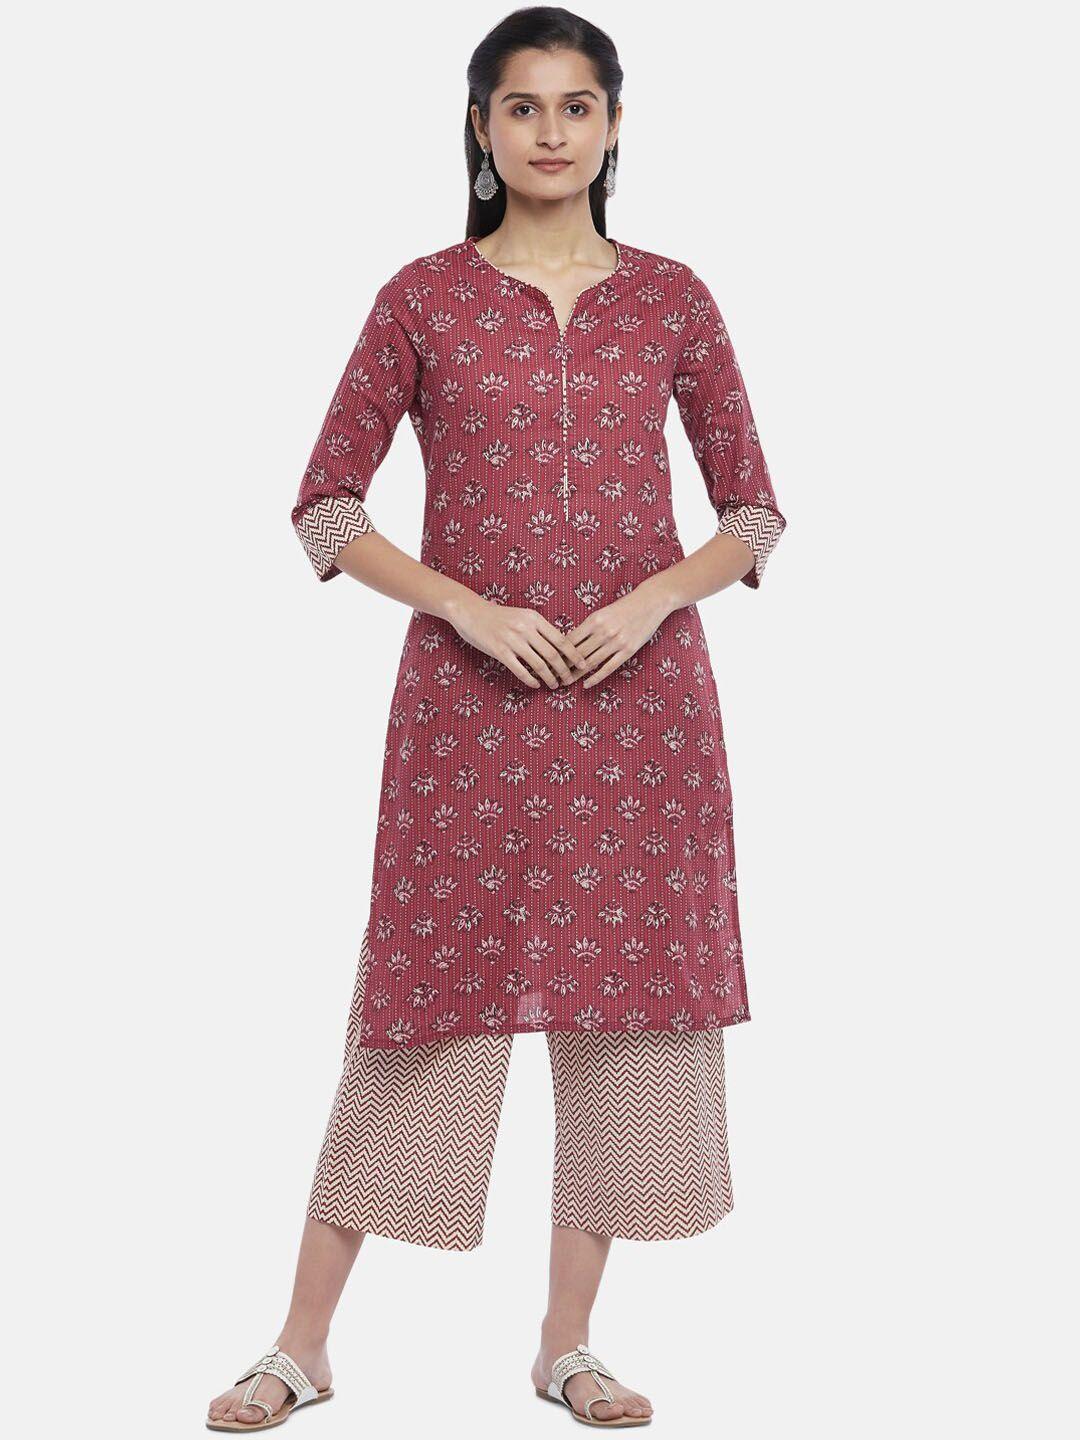 rangmanch by pantaloons rust ethnic motifs printed pure cotton kurta with palazzos